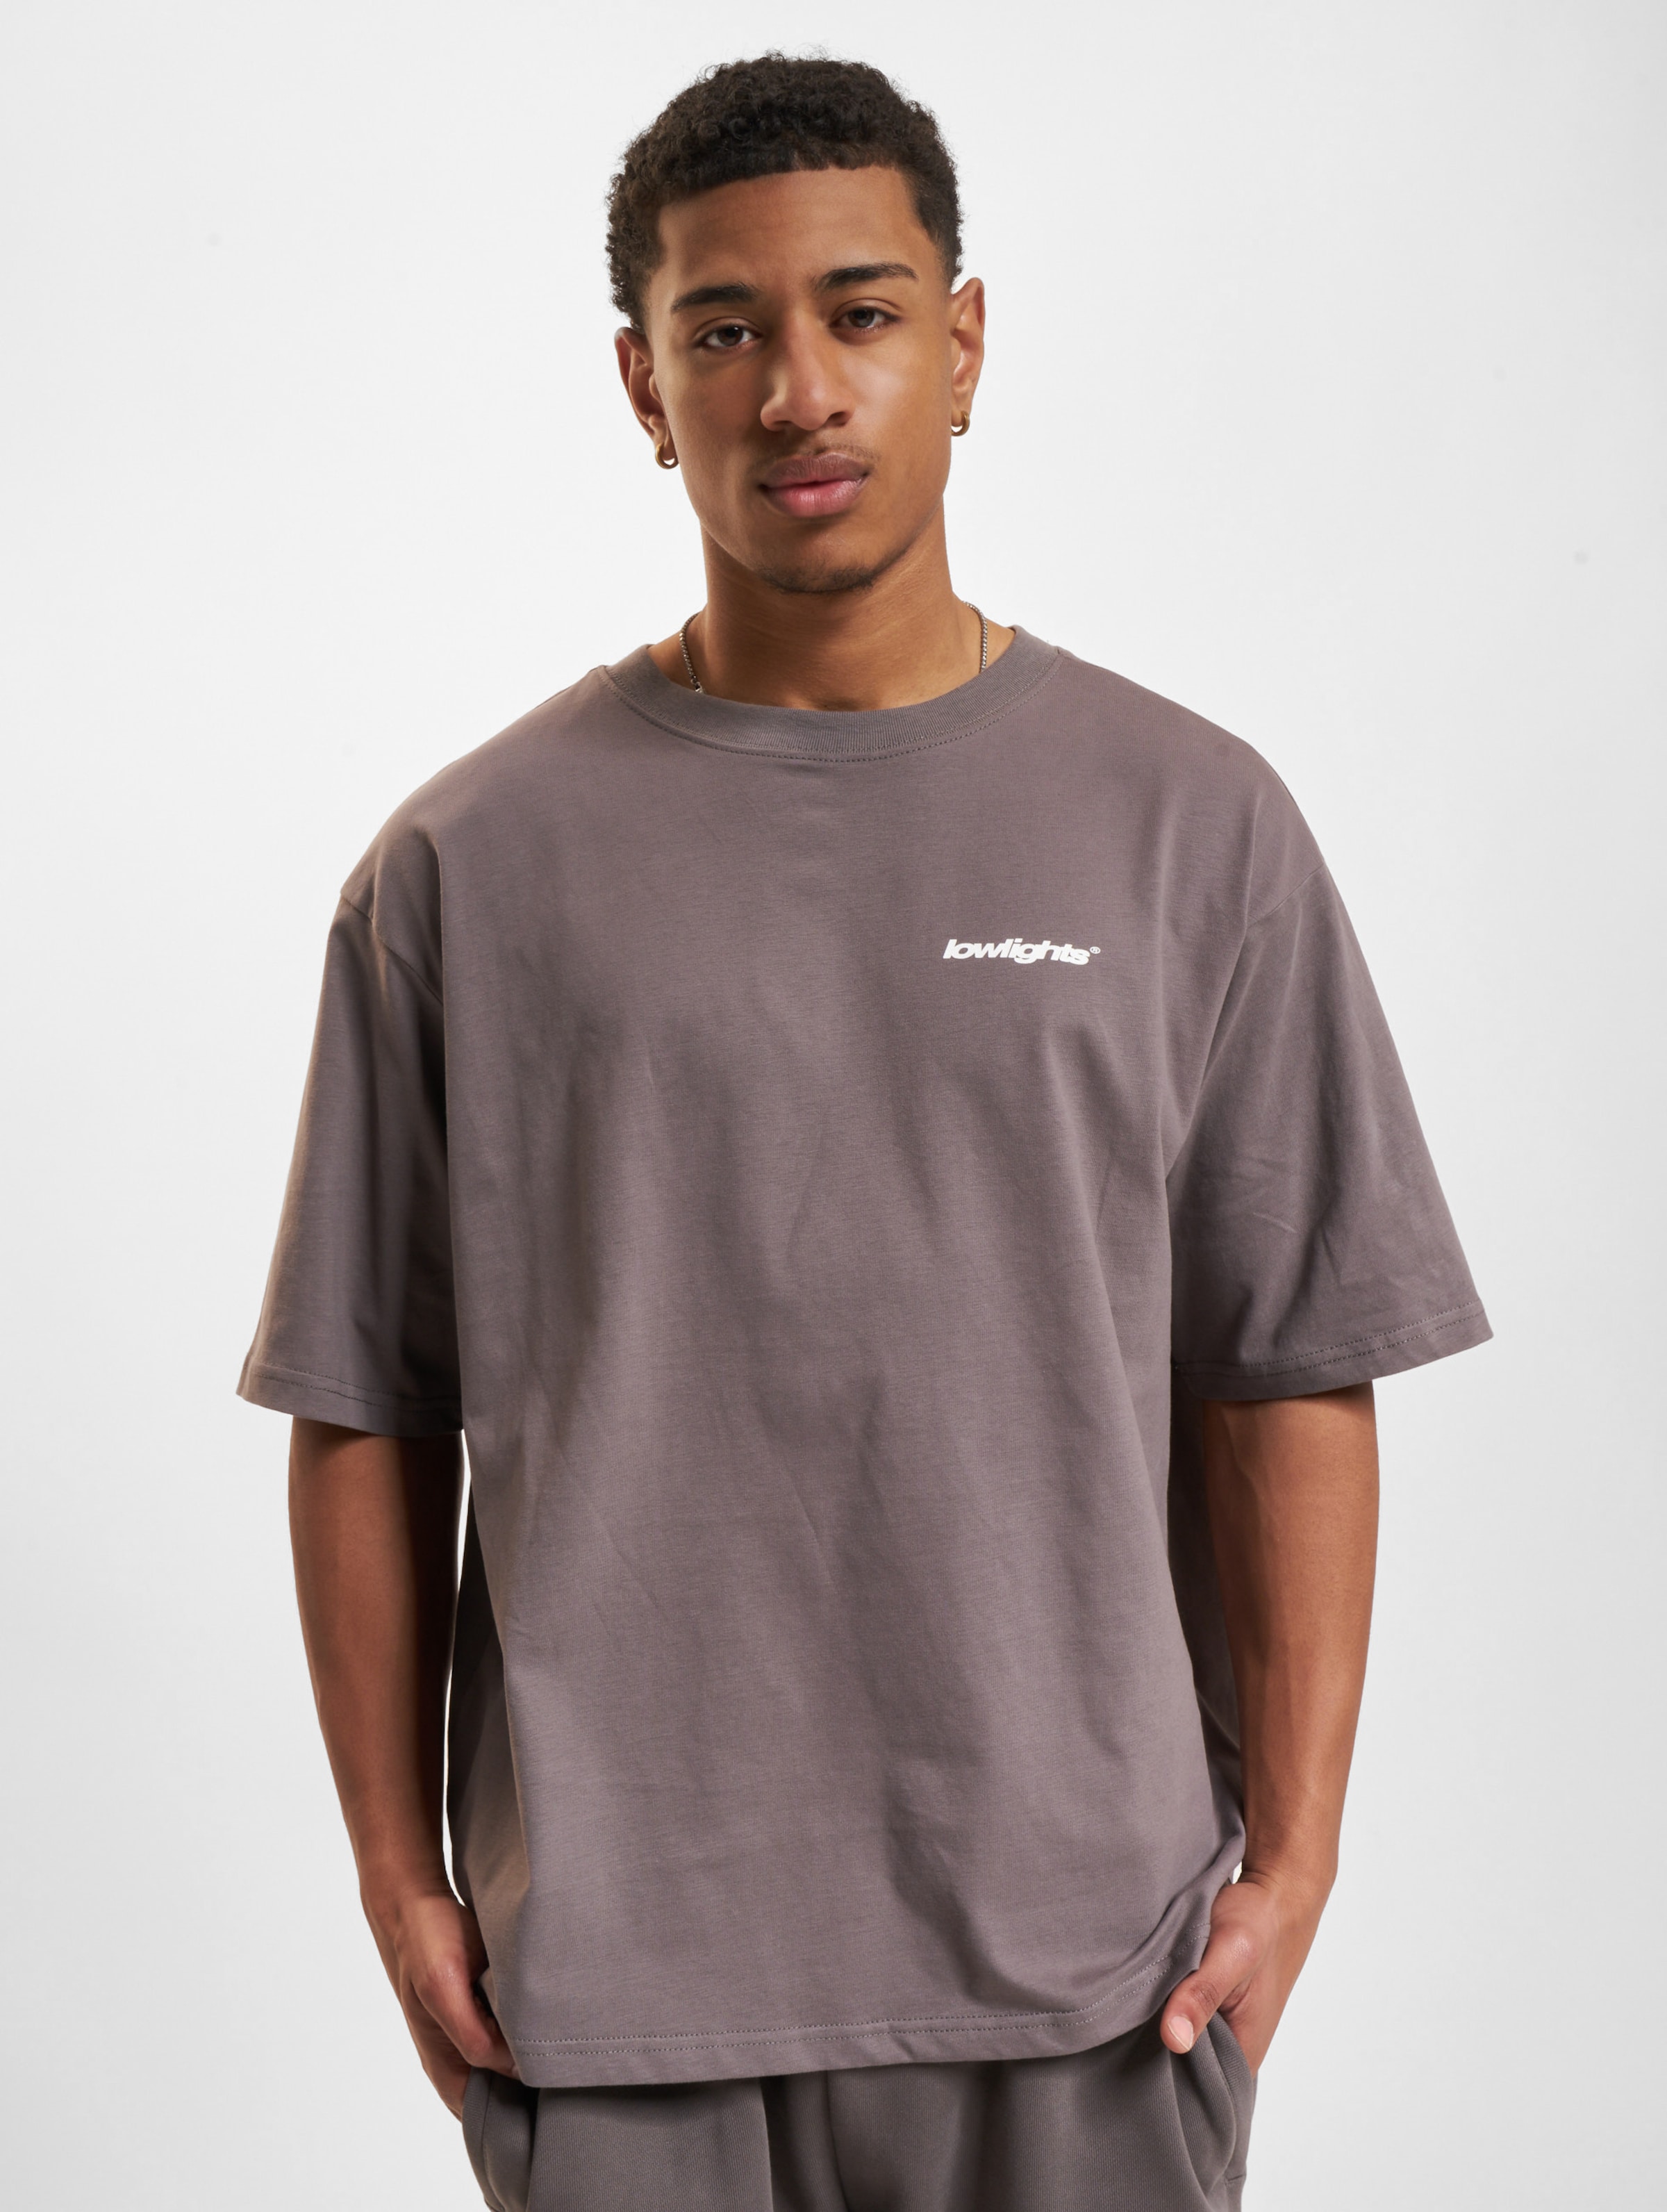 Low Lights Studios Basic T-Shirt washed grey Männer,Unisex op kleur grijs, Maat S